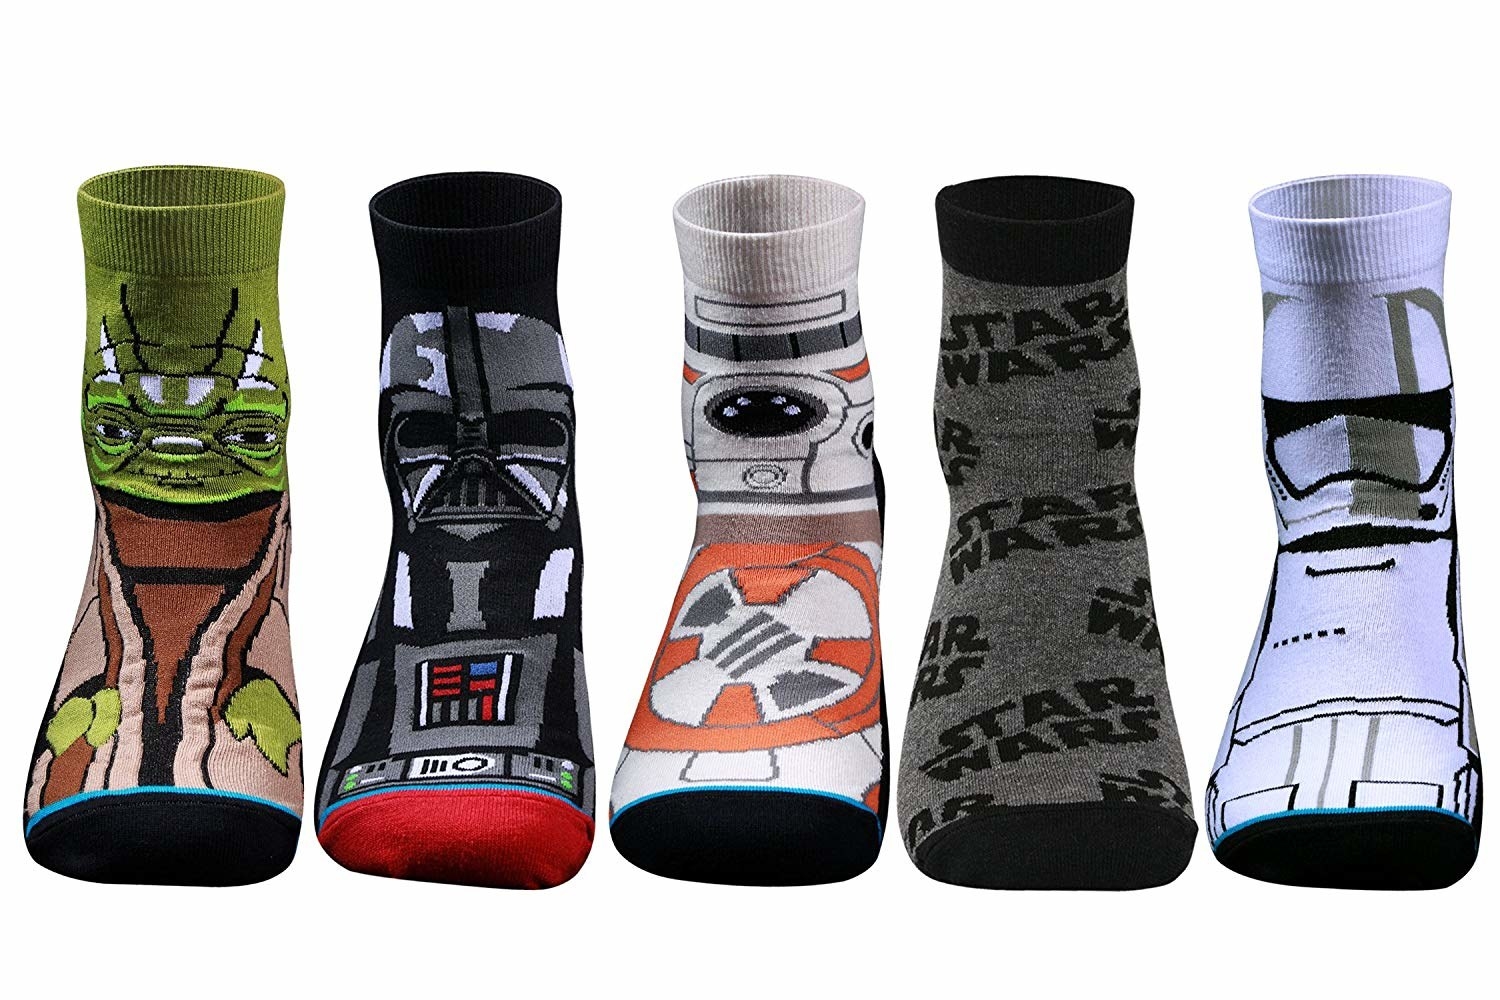 Yoda, Darth Vader, BB-8, Stromtrooper, Star Wars socks